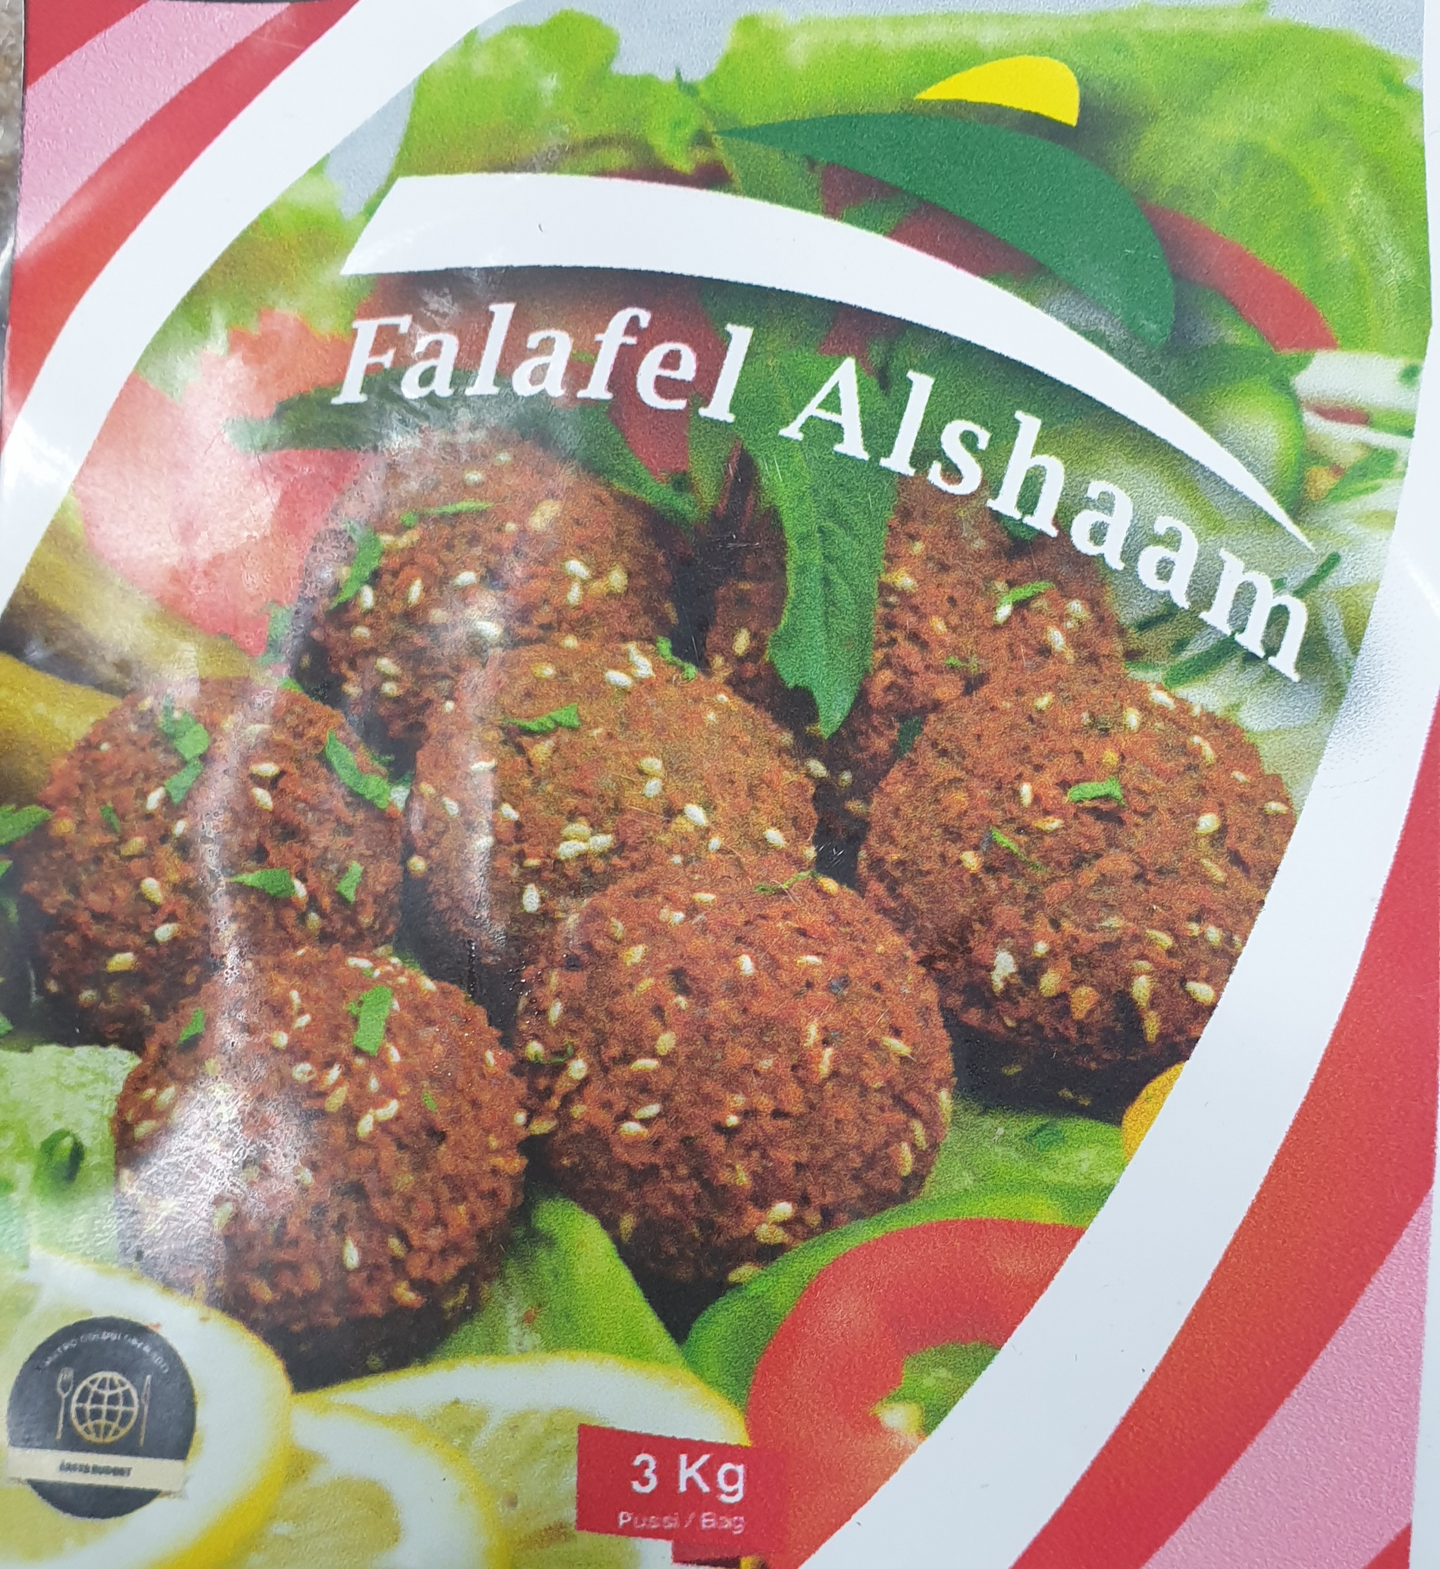 Falafel Alshaam kypsä pyörykkä n. 30g/3kg pakaste